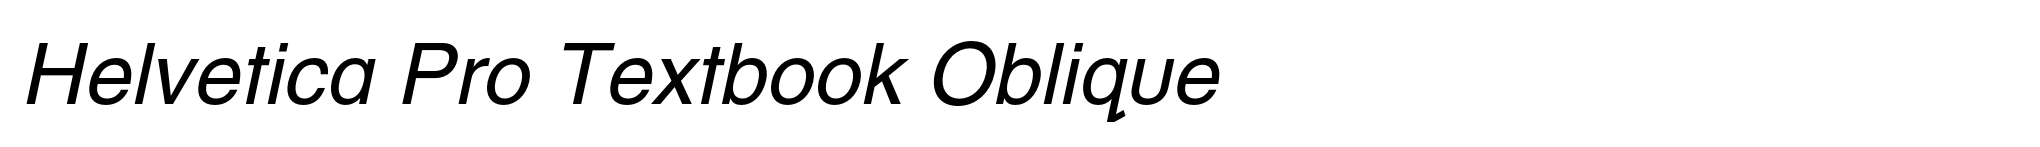 Helvetica Pro Textbook Oblique image